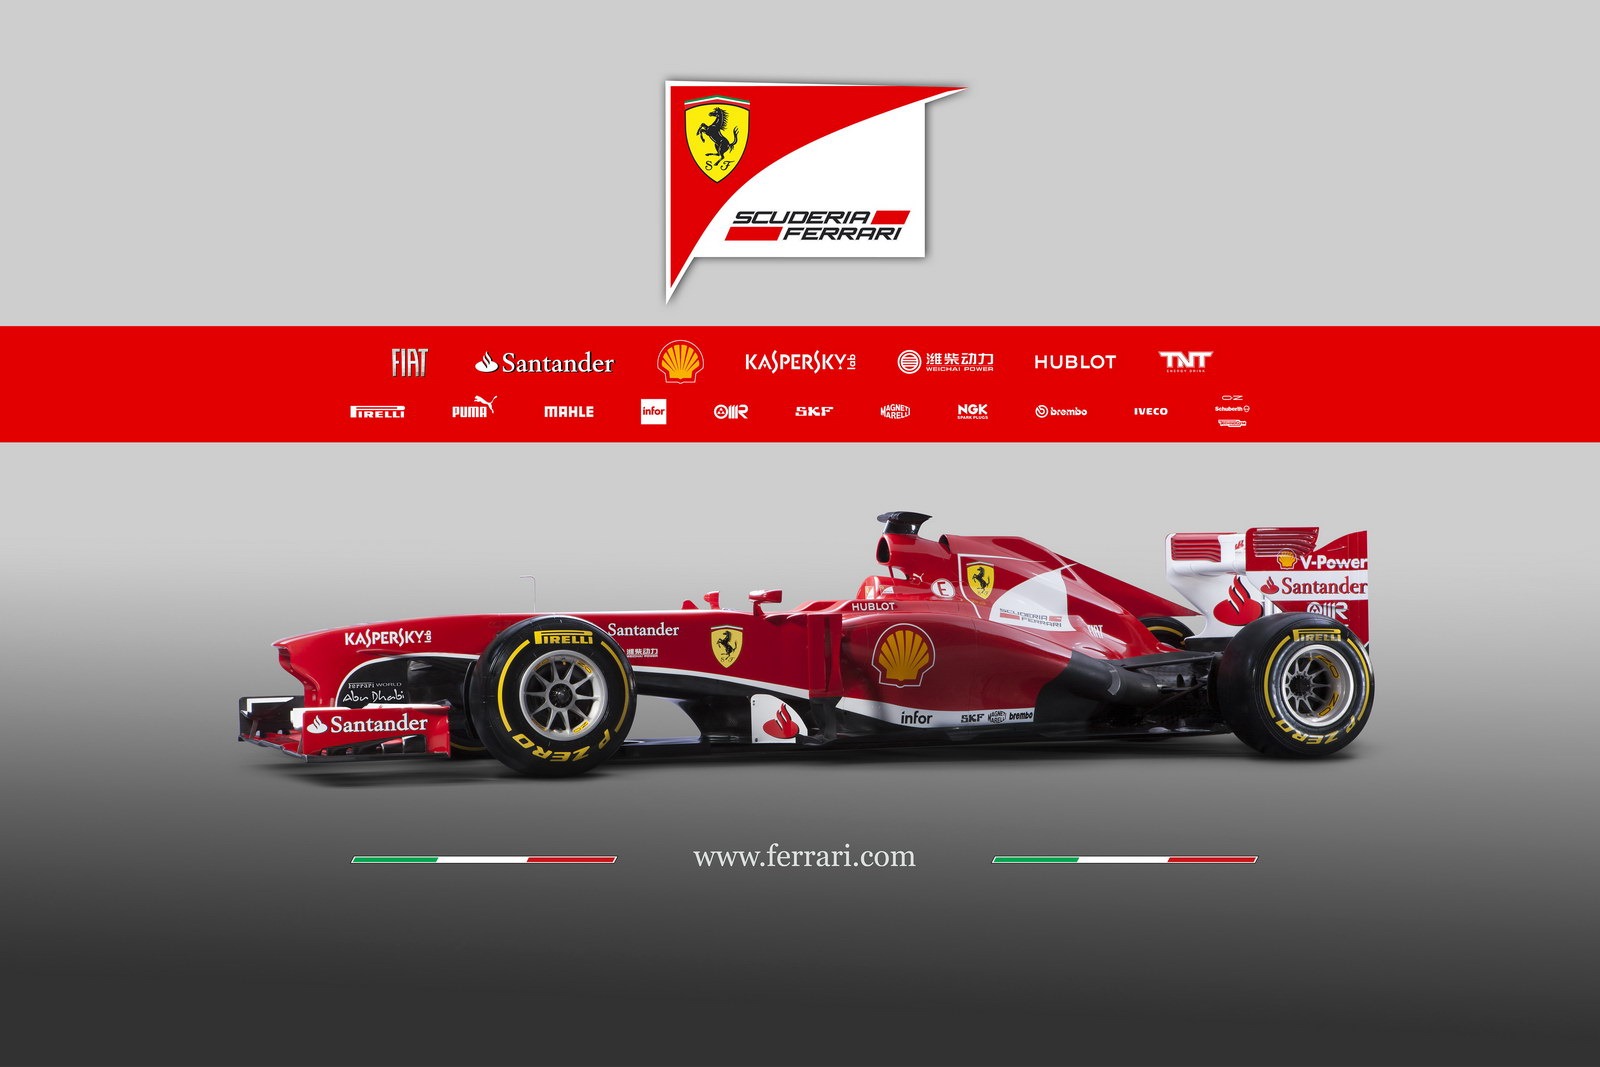 Ferrari Formula 1 Wallpaper Images Pictures   Findpik